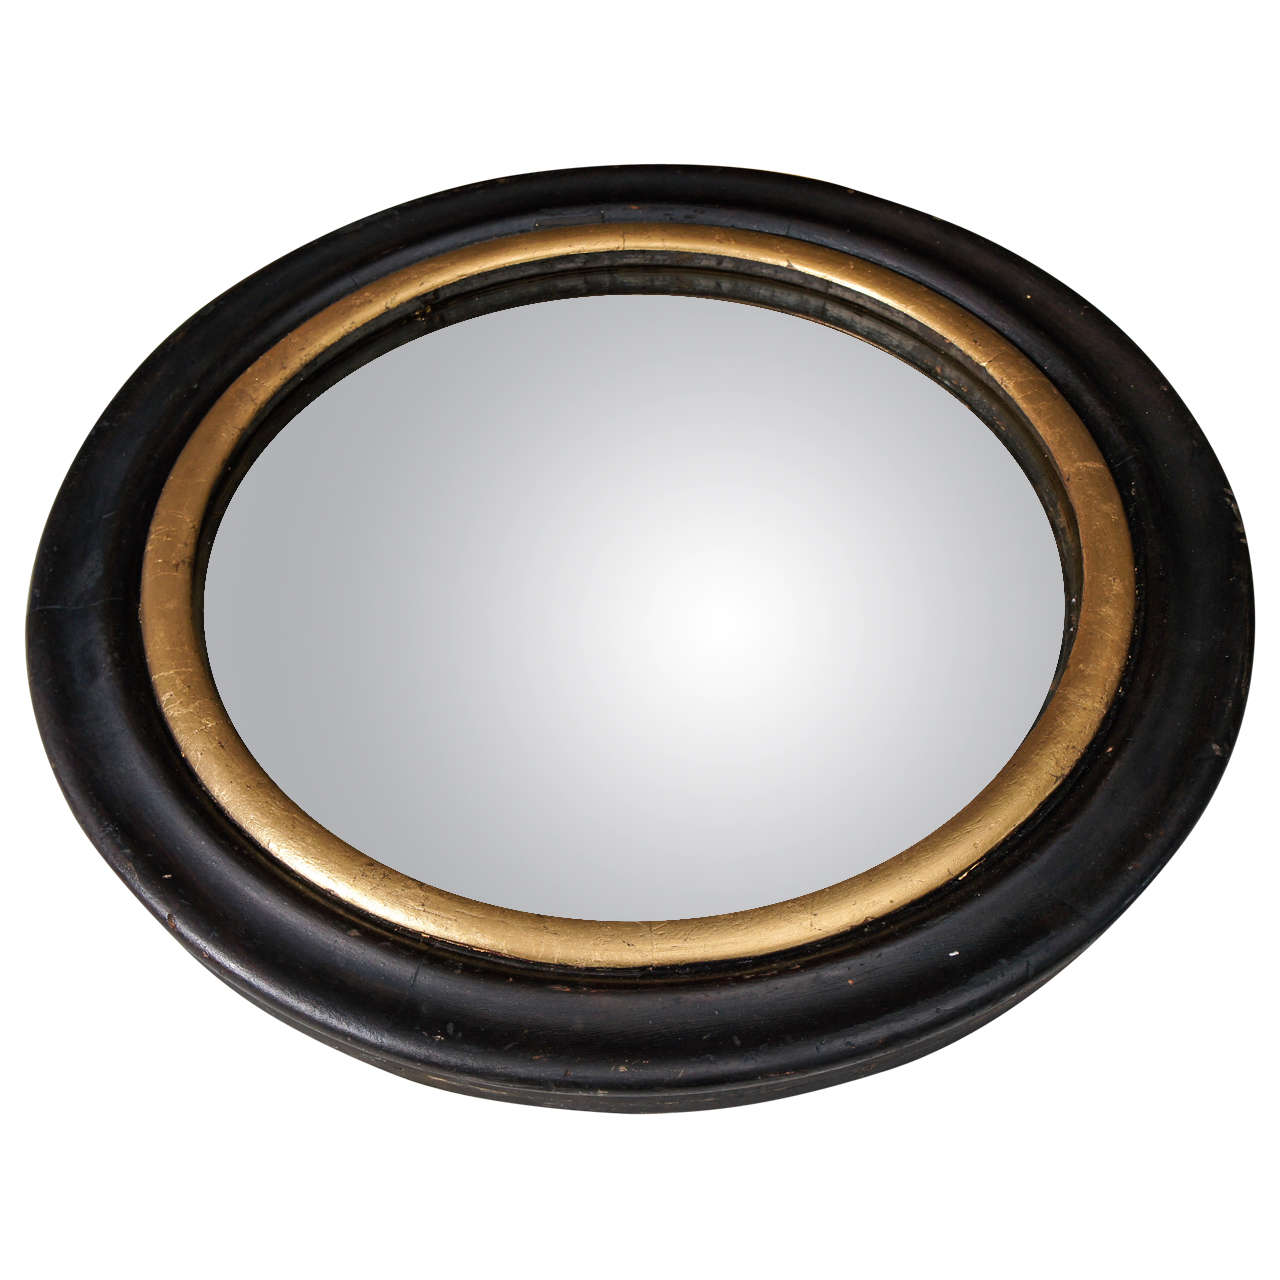 Circular Frame with Convex Mirror